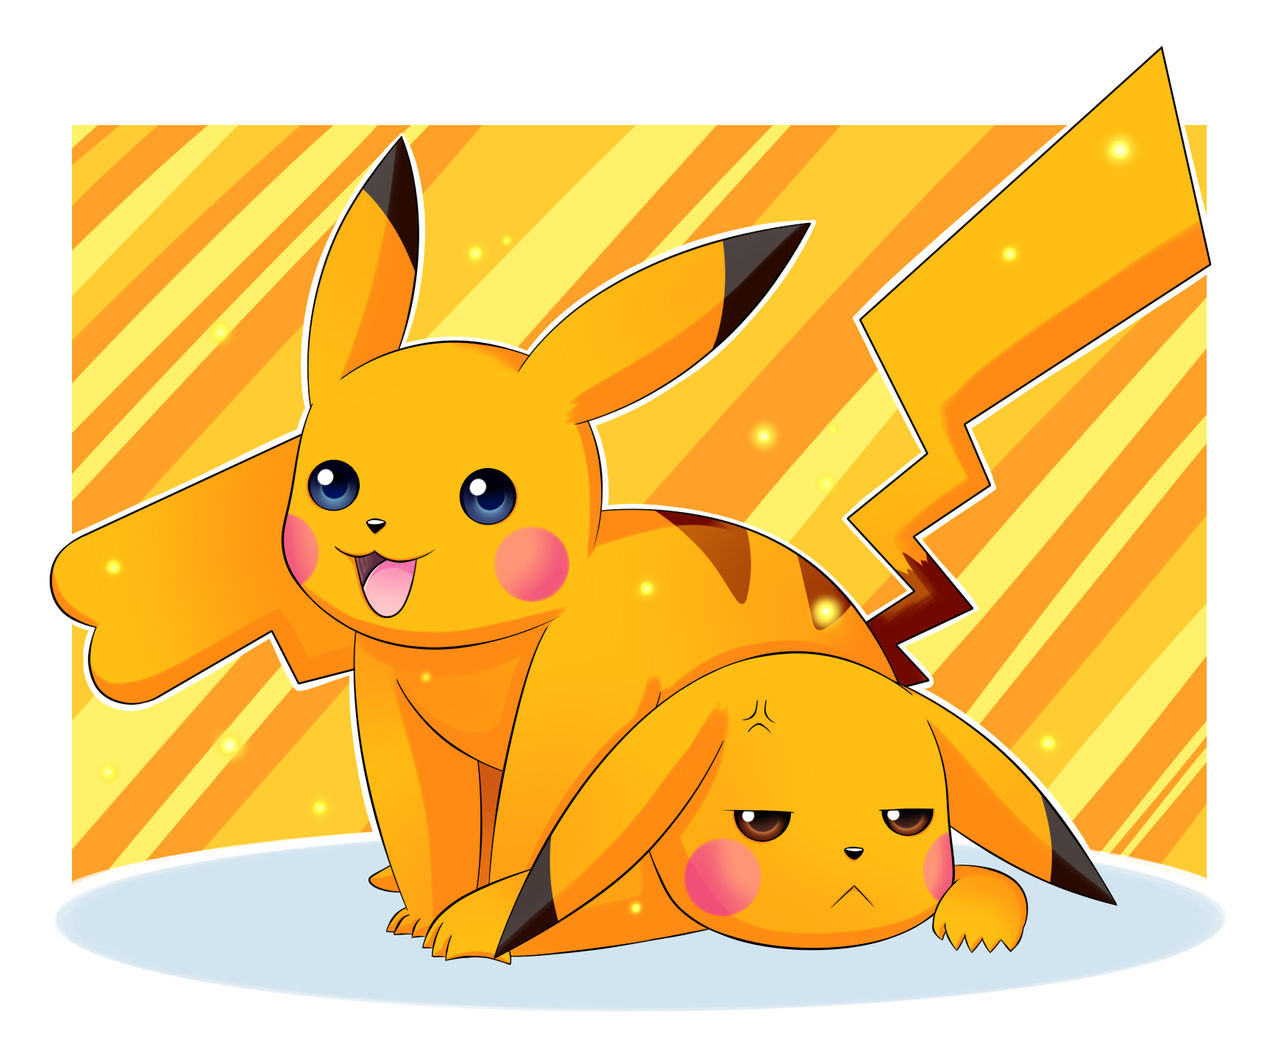 Shiny Pikachu by ConceptShinies on DeviantArt